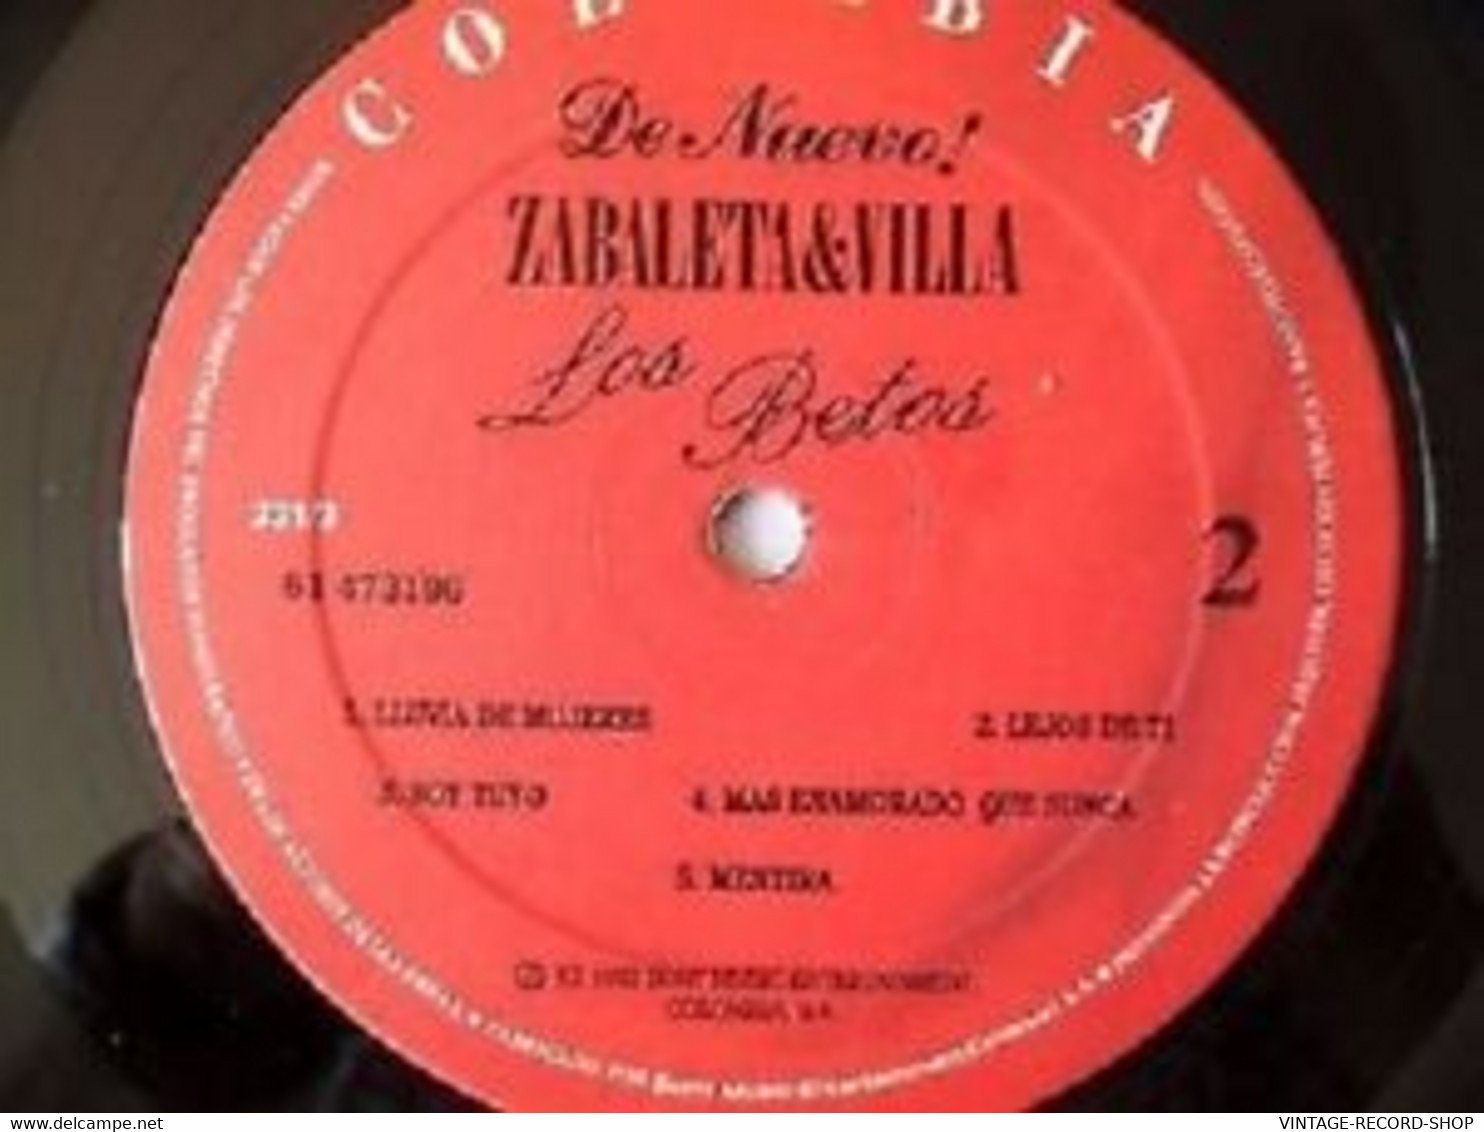 LOS BETOS *DE NUEVO* ZABALETA & VILLA *1992 COLUMBIA VG+LATIN MUSIC - Música Del Mundo